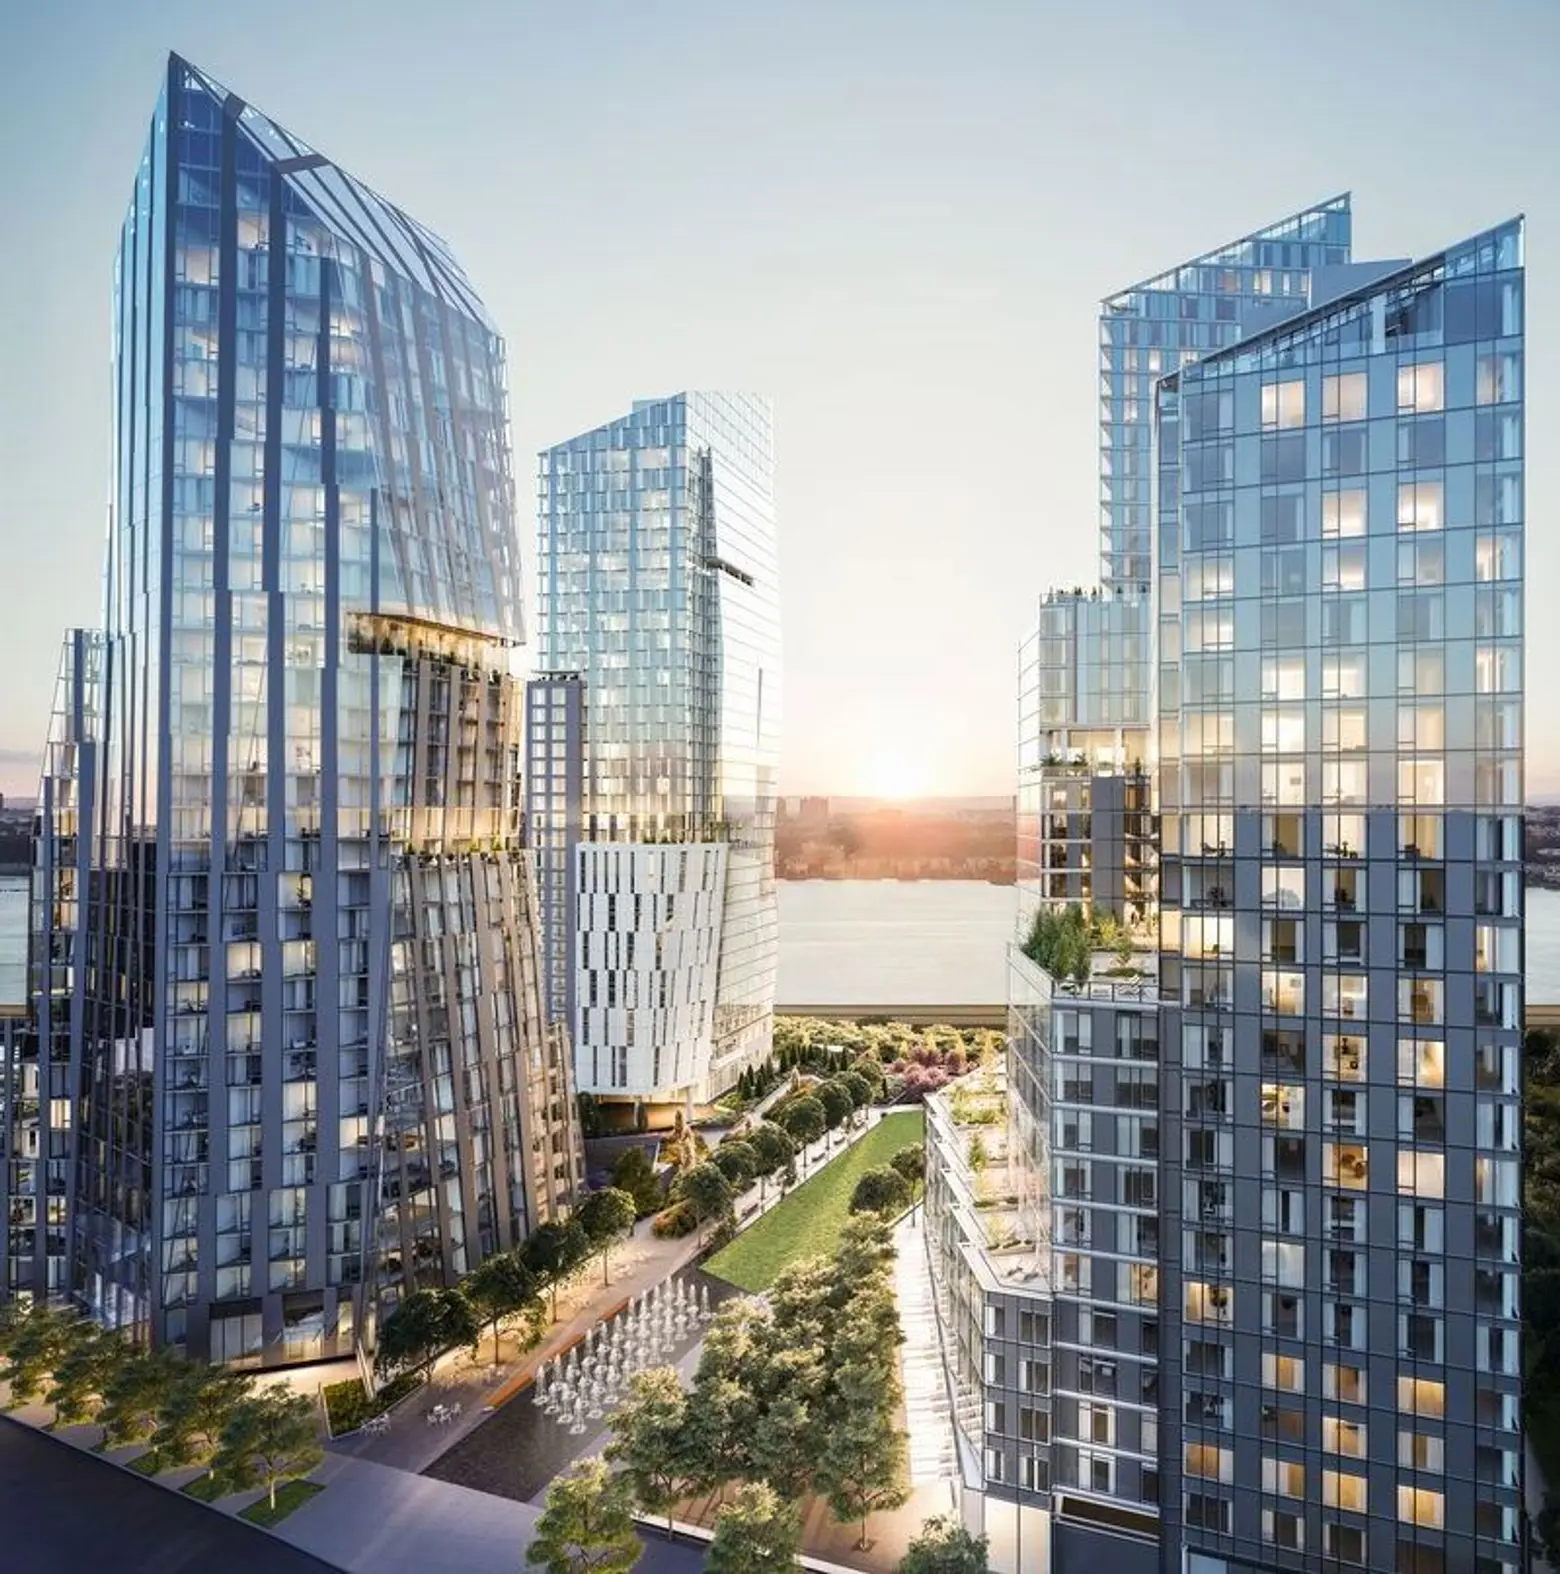 Richard Meier, Rafael Viñoly, and KPF release designs for Upper West Side waterfront development